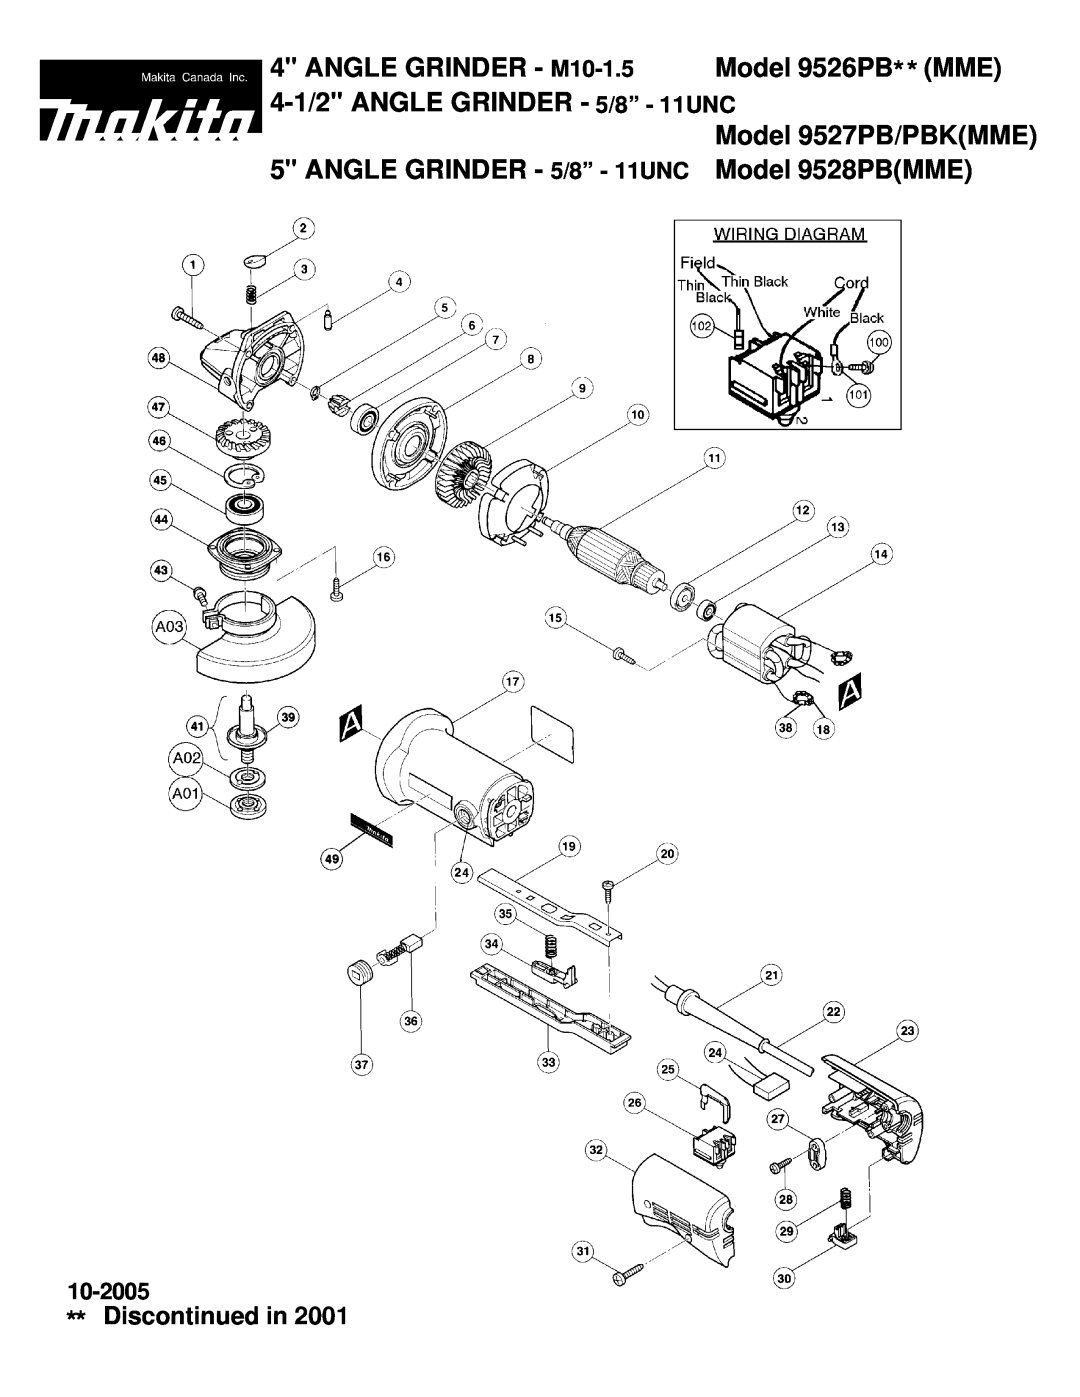 Makita manual ANGLE GRINDER - M10-1.5, Model 9526PB ** MME, 4-1/2 ANGLE GRINDER - 5/8” - 11UNC, Model 9527PB/PBKMME 